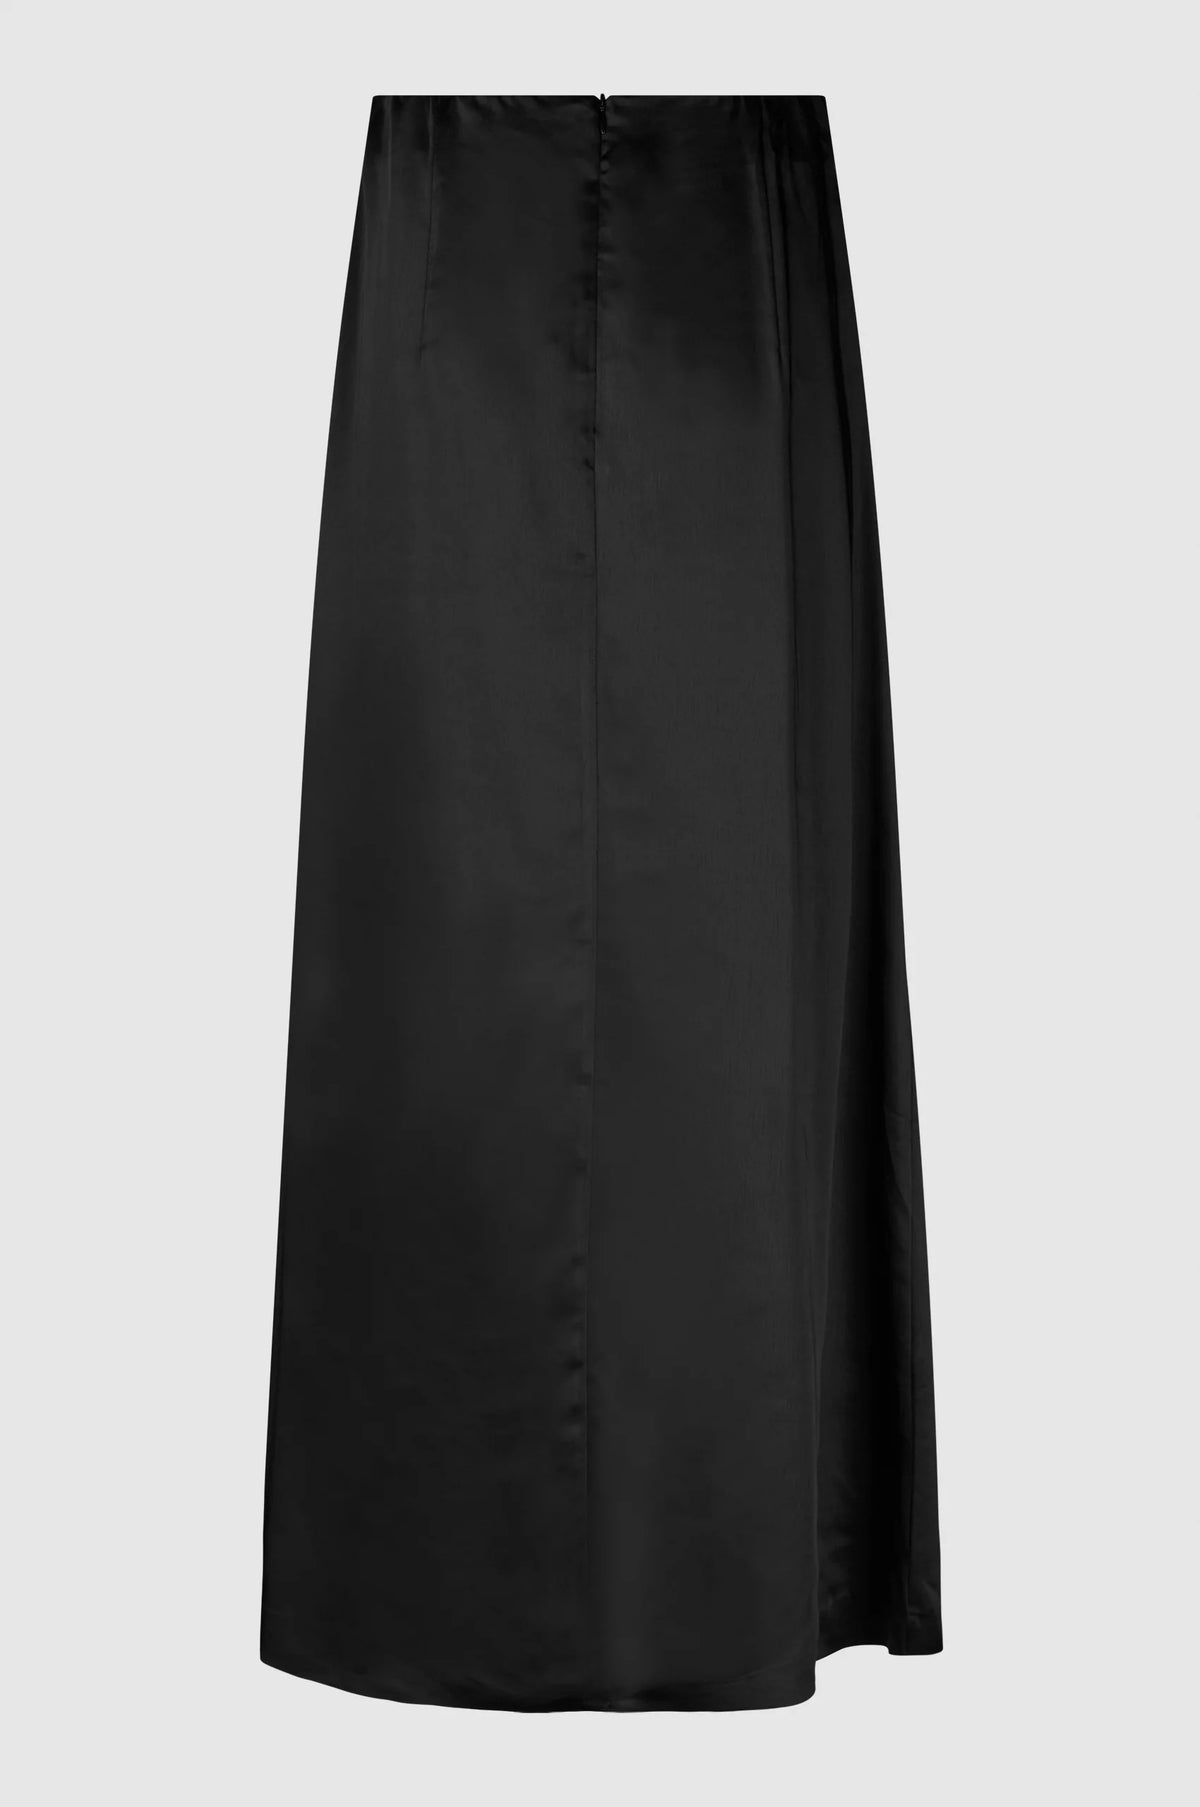 Black satin maxi A line skirt